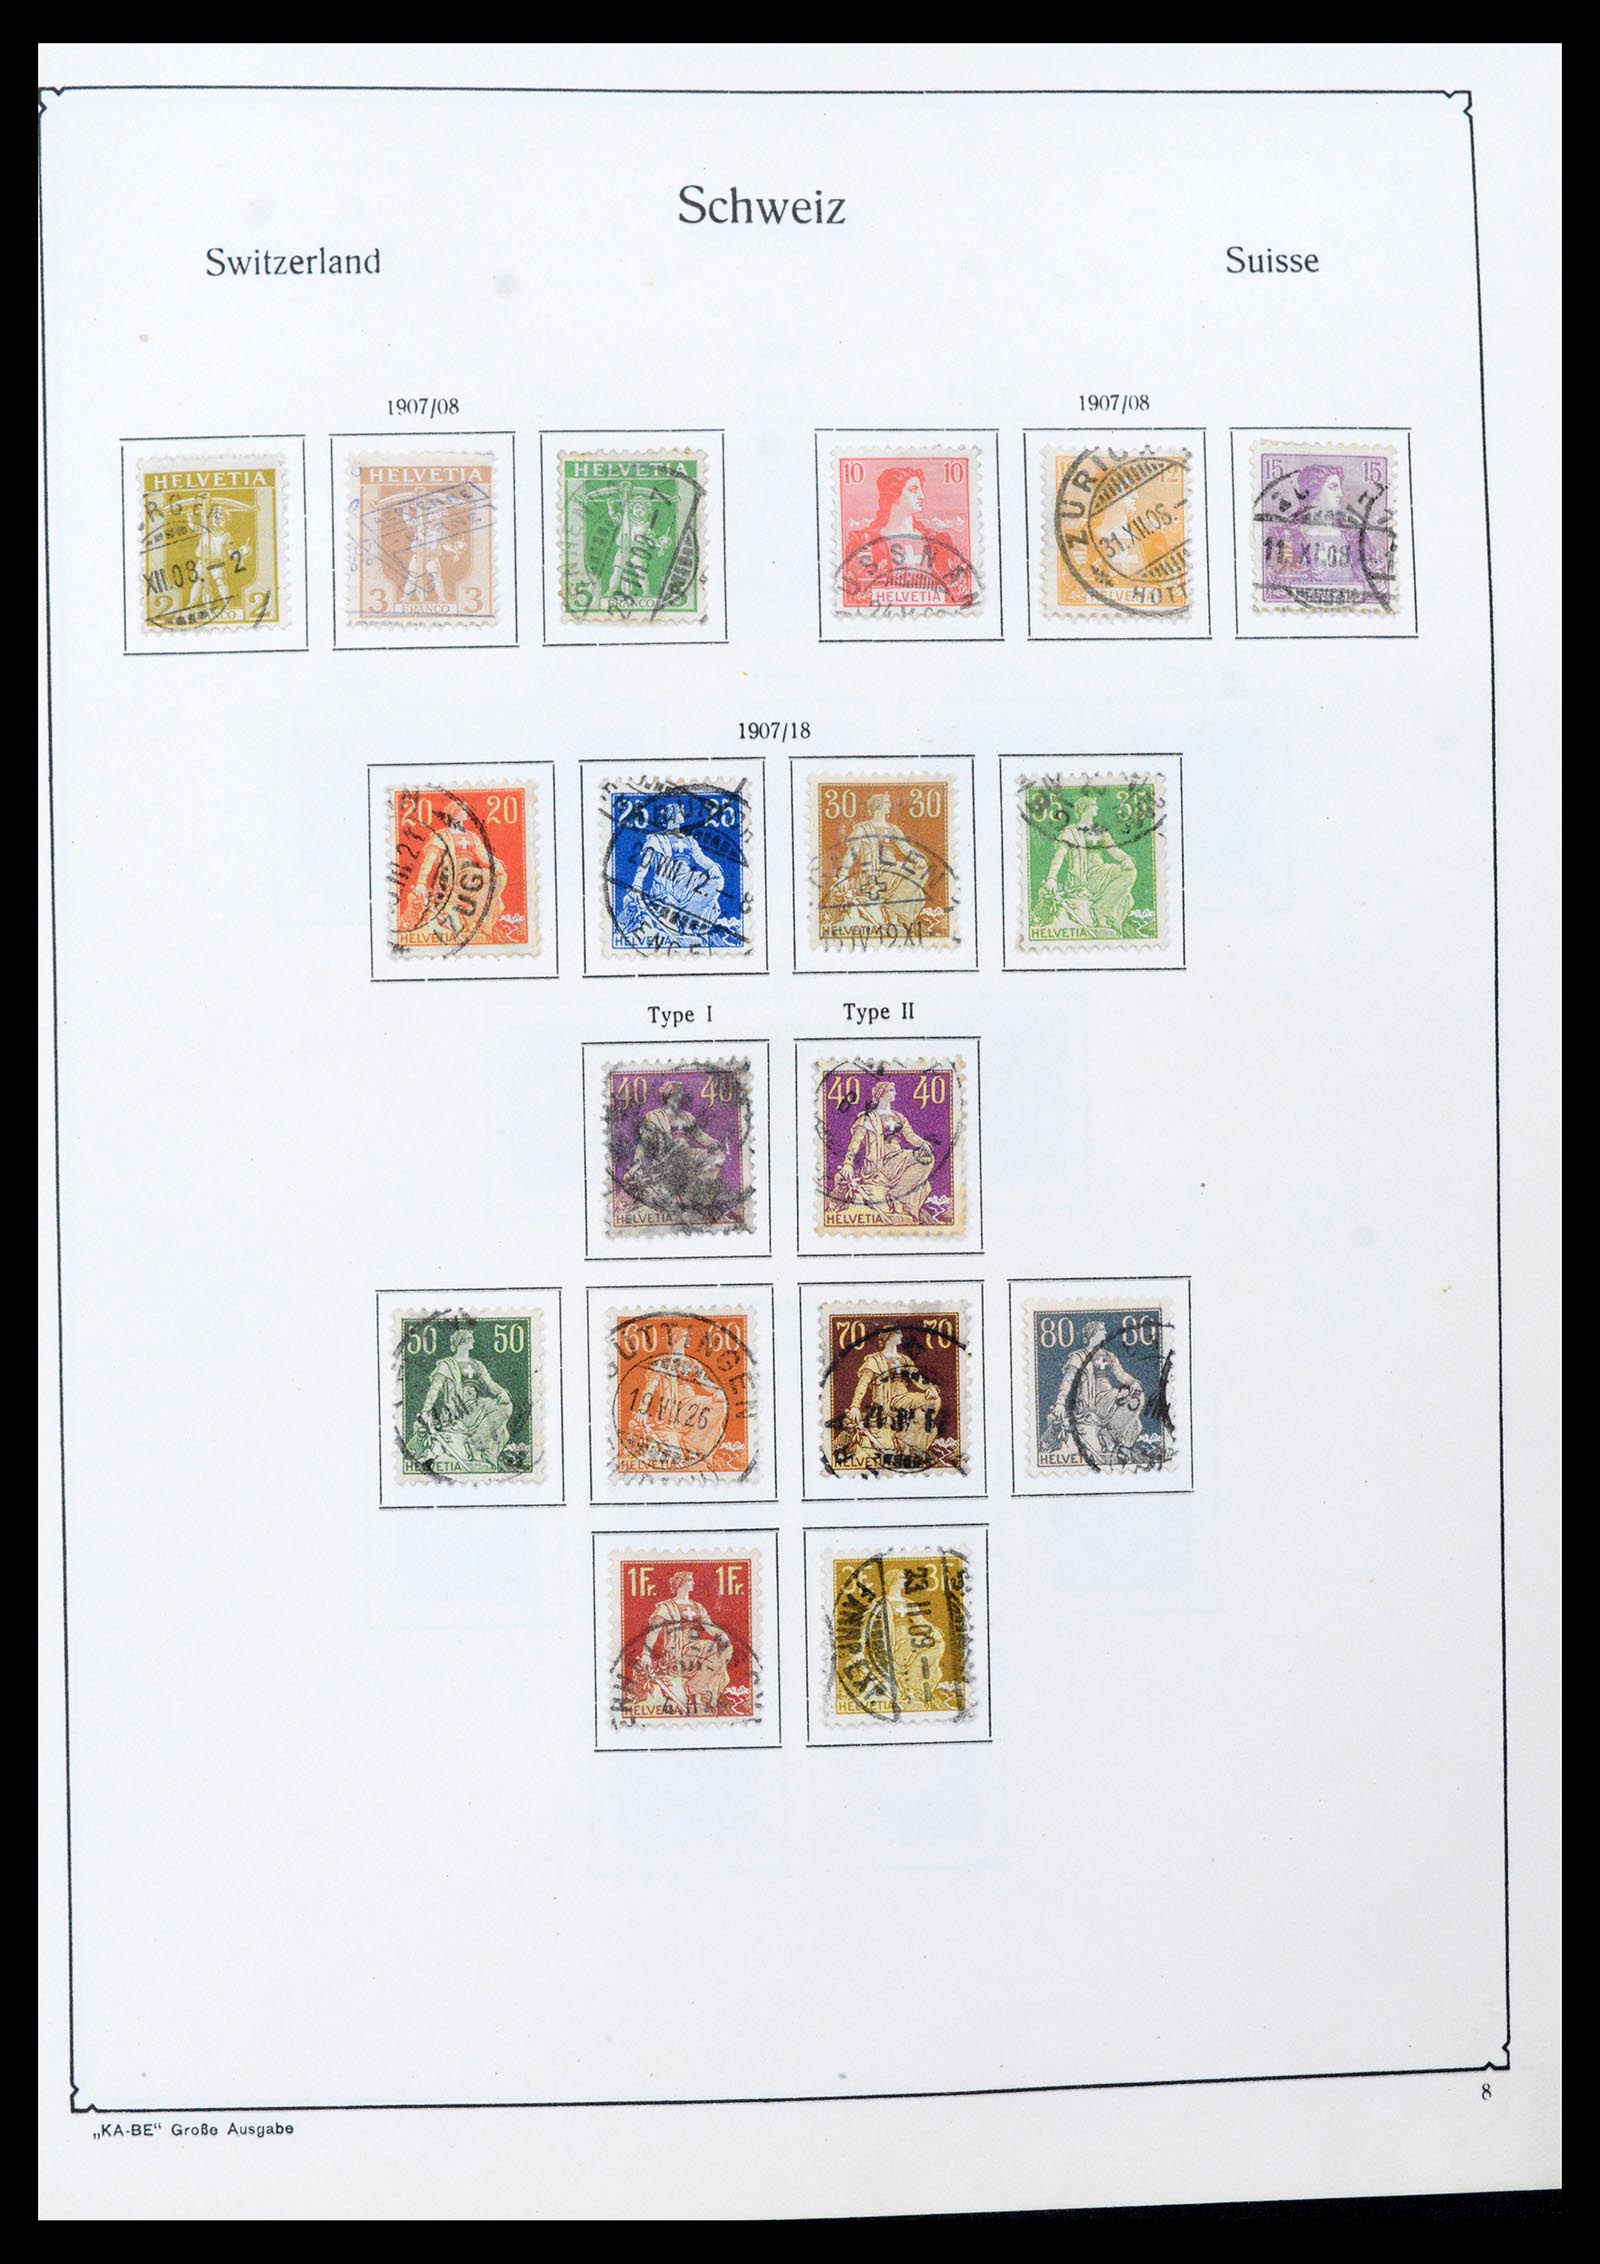 37588 007 - Stamp collection 37588 Switzerland 1854-1974.